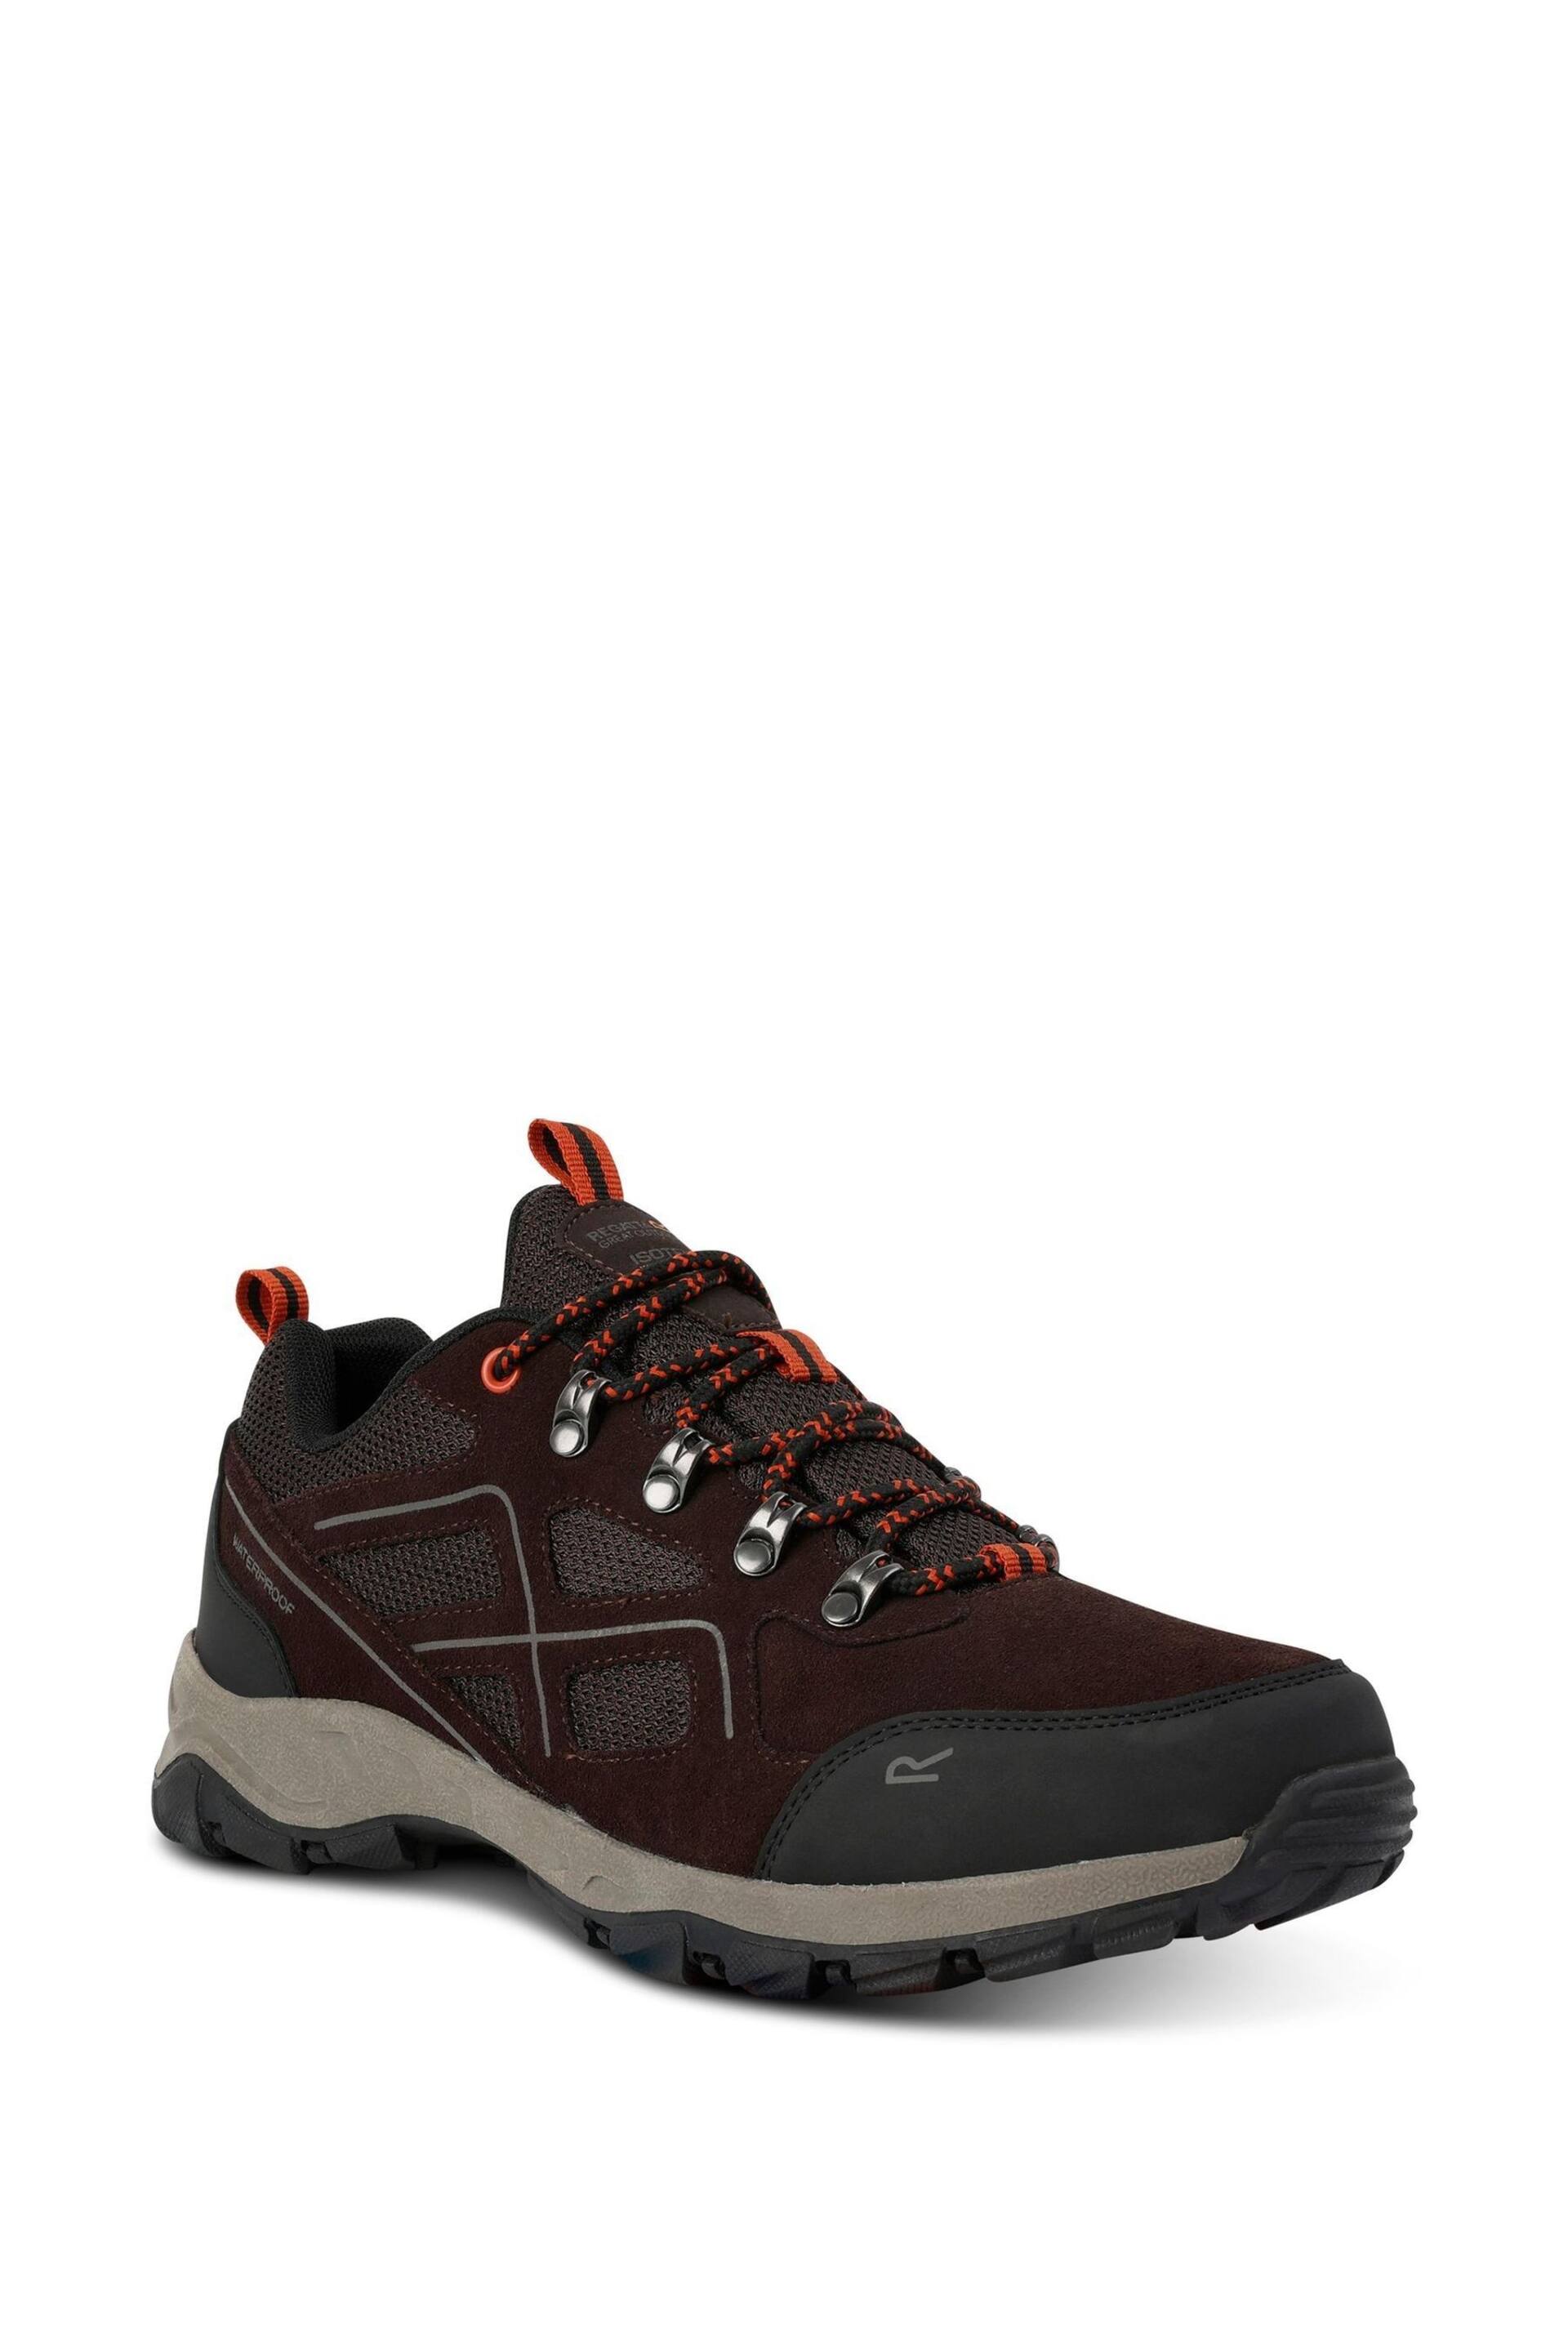 Regatta Brown Vendeavour Suede Waterproof Hiking Shoes - Image 2 of 8